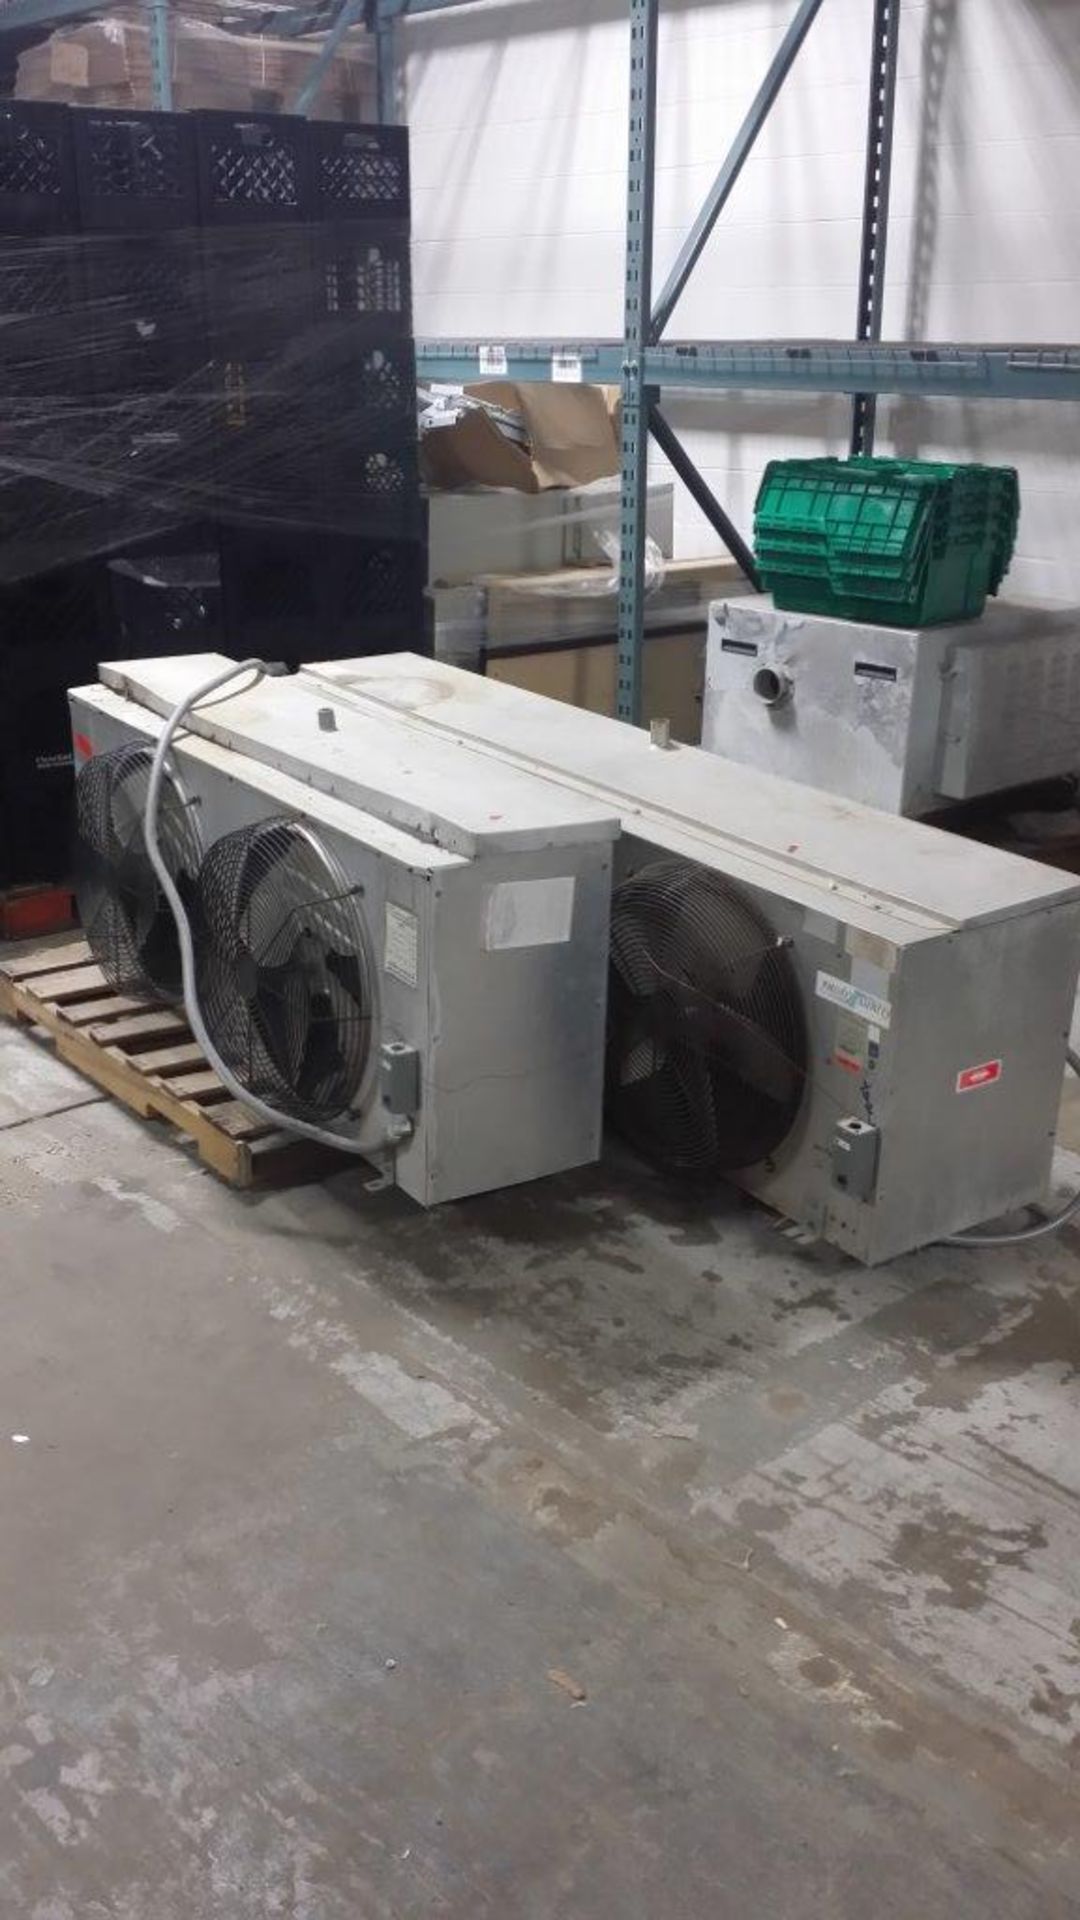 Heatcraft Refrigeration Units  (1) Krack Model No: MK26-290A-230, Serial # 444552-01B,  Unit for use